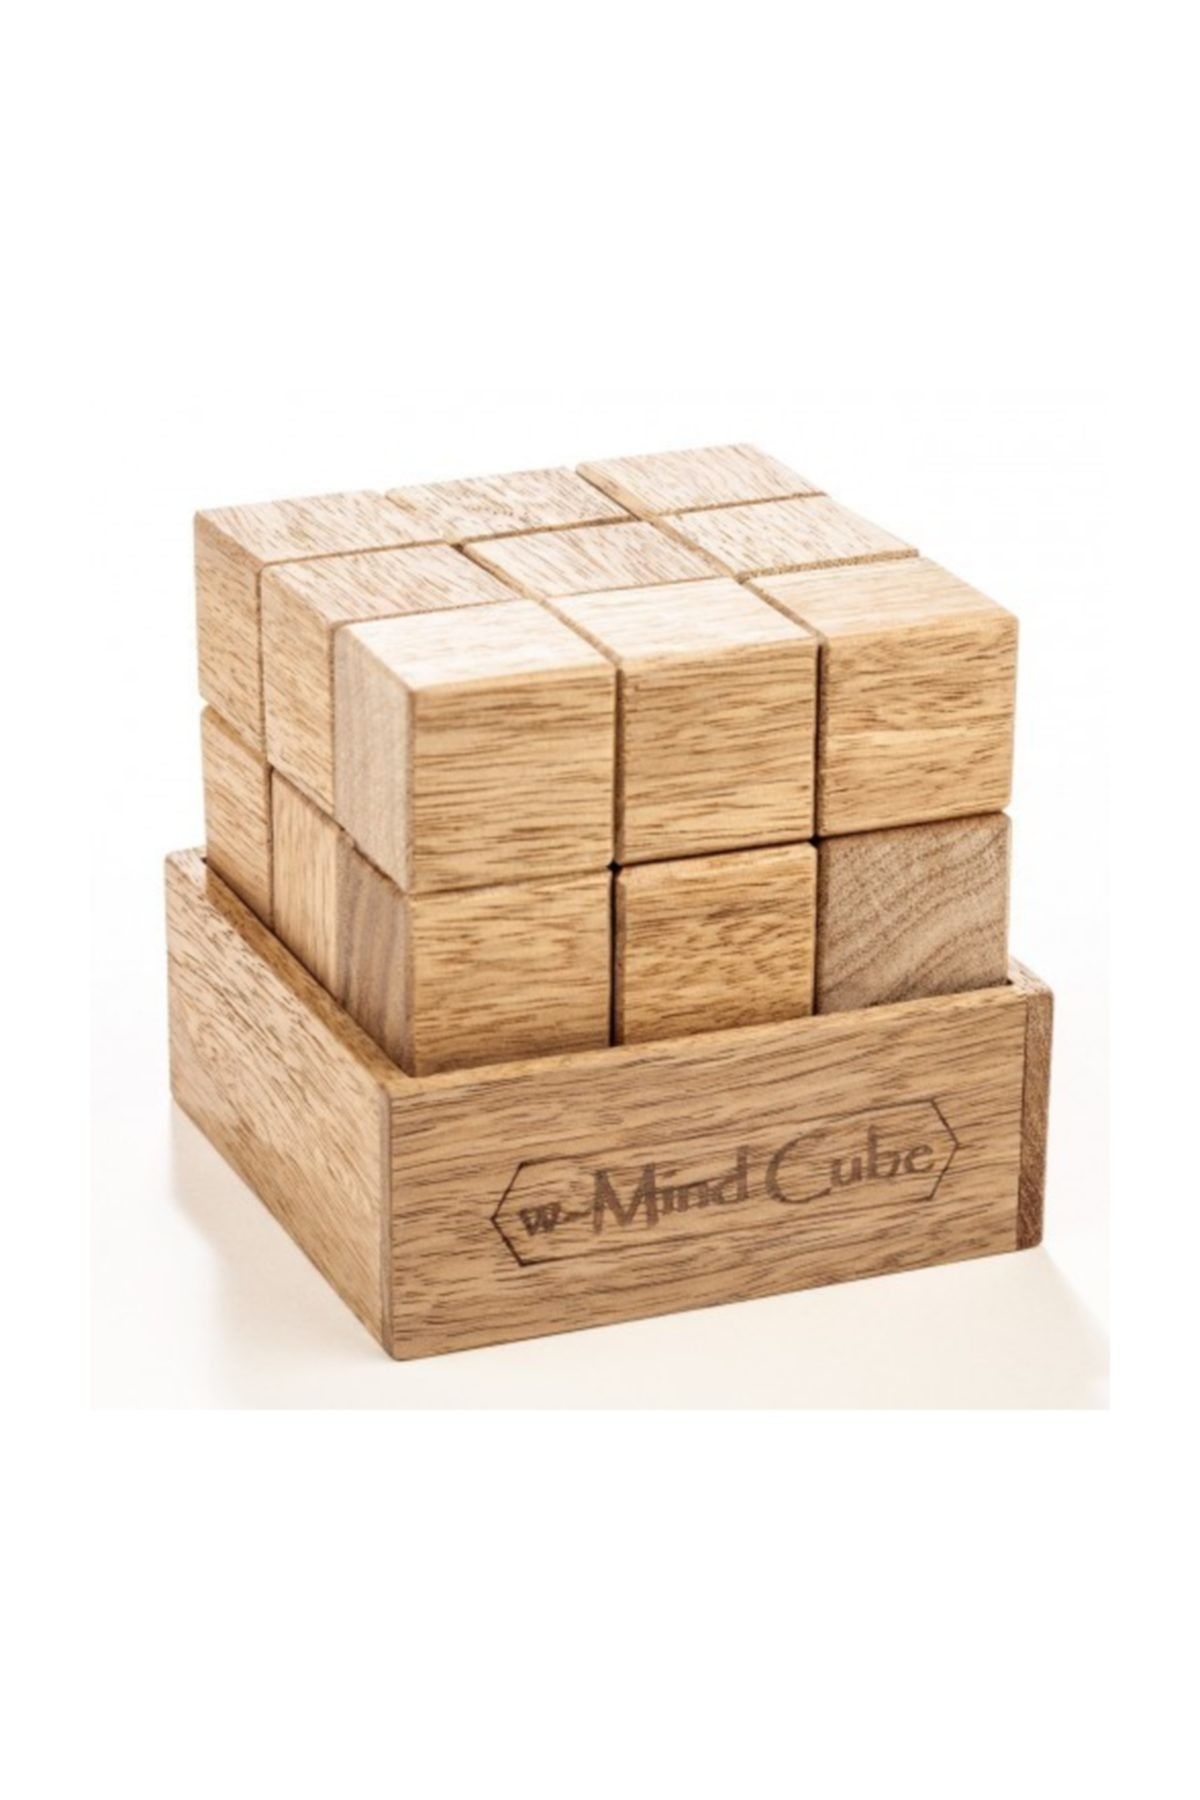 Bookinzi Montessori Ahşap Zeka Oyunları / wMind Cube